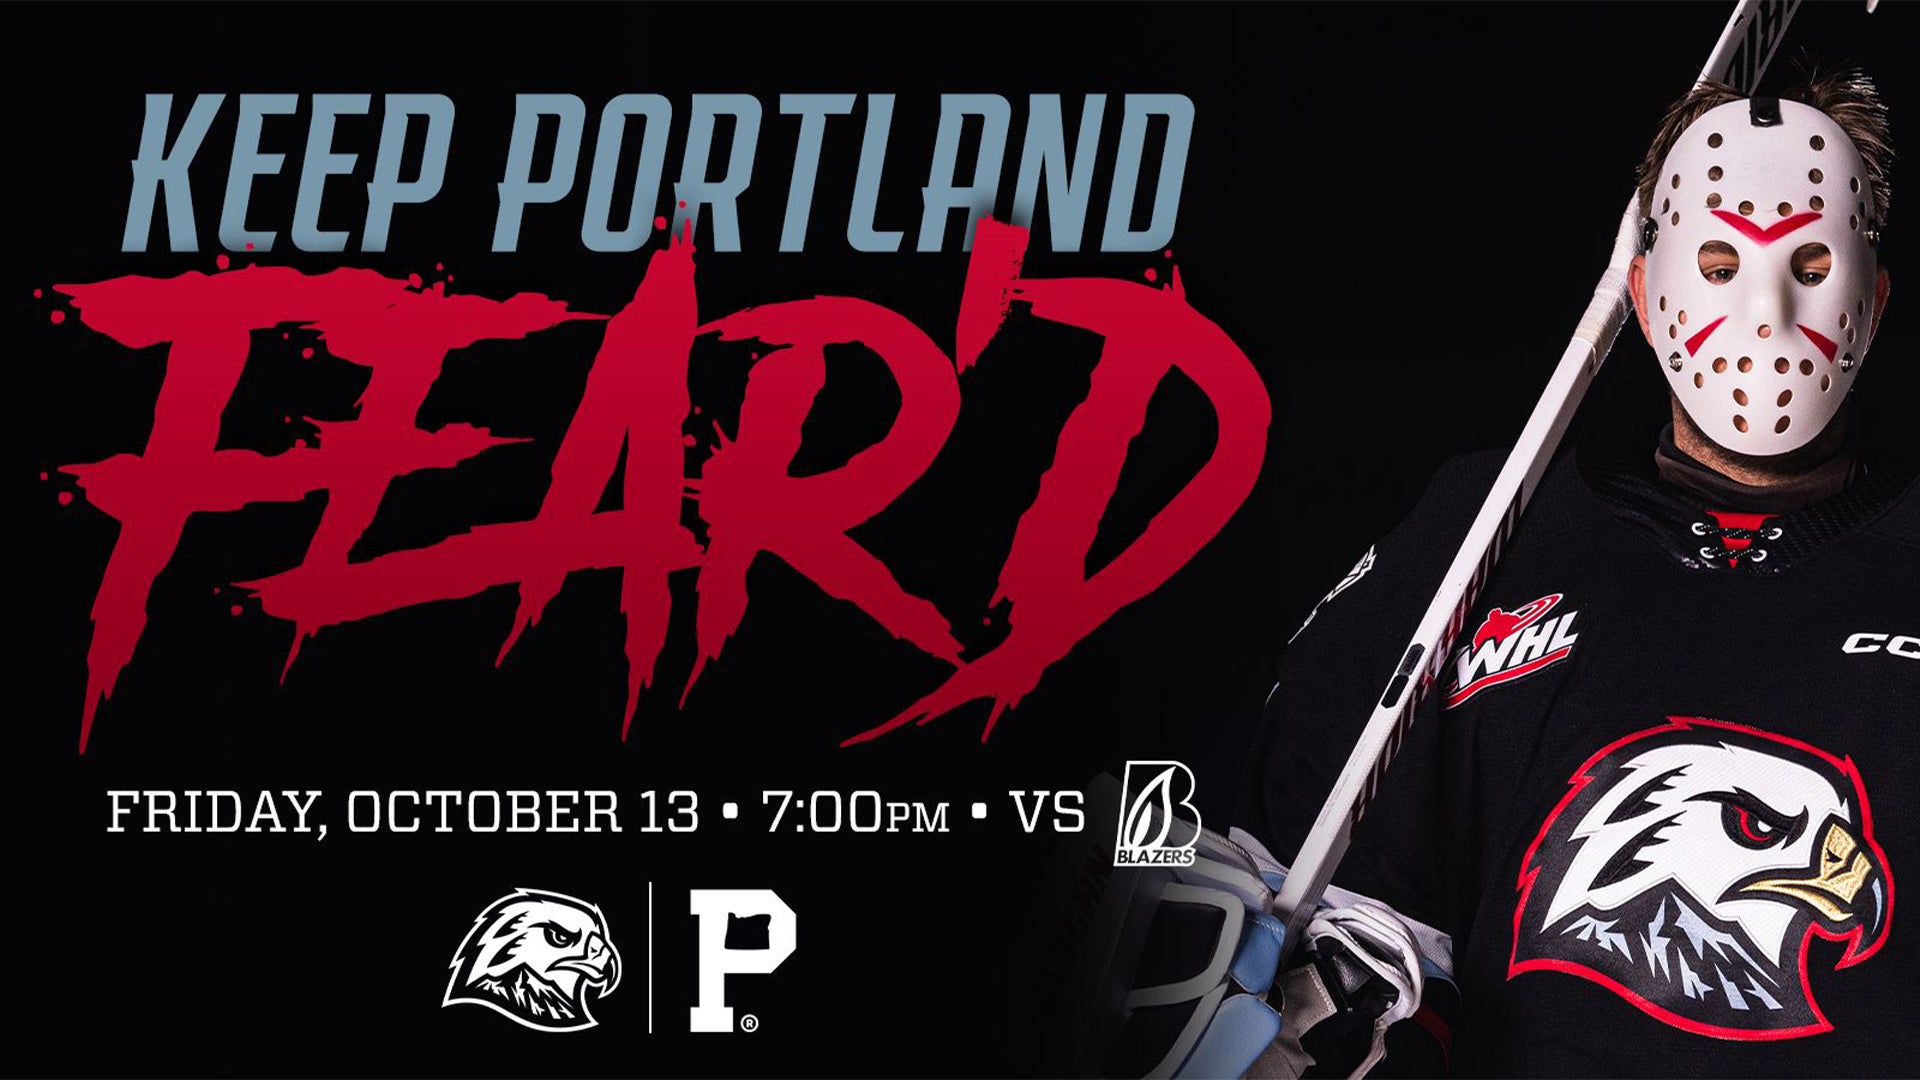 "Keep Portland Fear'd": An Eerie Encounter with Portland Winterhawks!